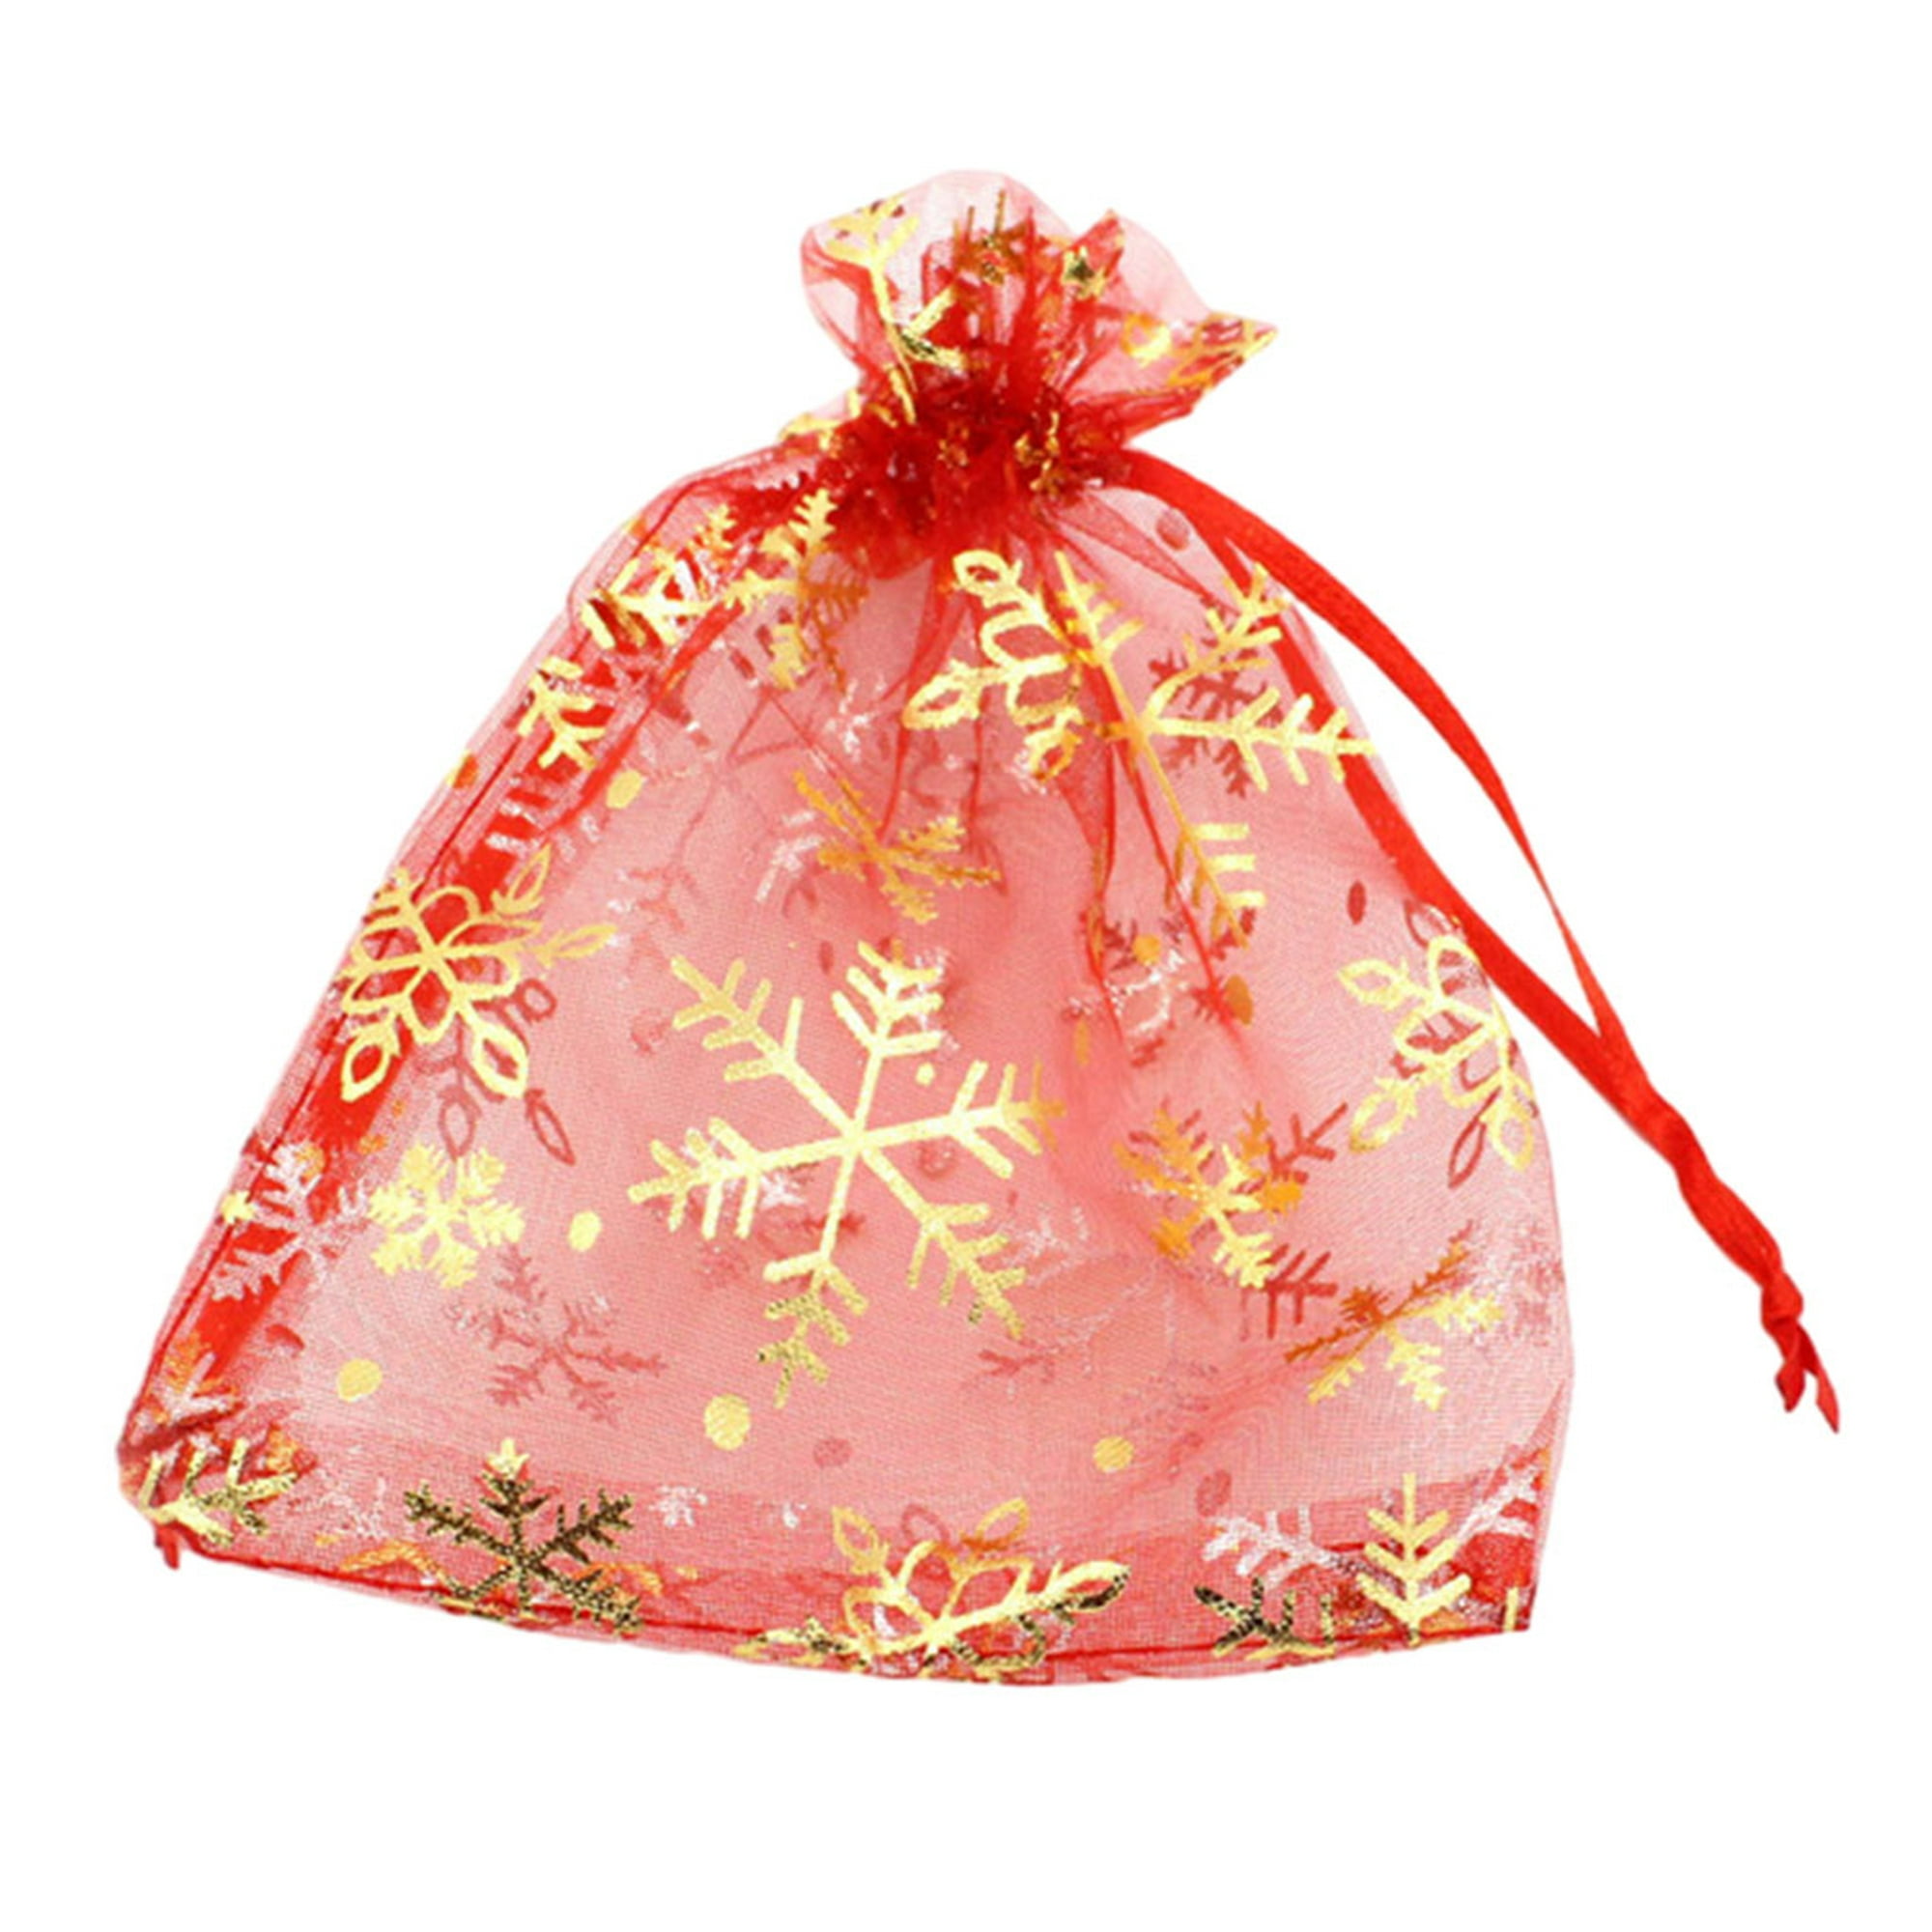 Naiovety 100x bolsas de organza pequeñas bolsas de regalo de red bolsas con  cordón pequeñas bolsas de regalo pequeñas bolsas de regalo estampado al  rojo vivo 10*15.100PCS